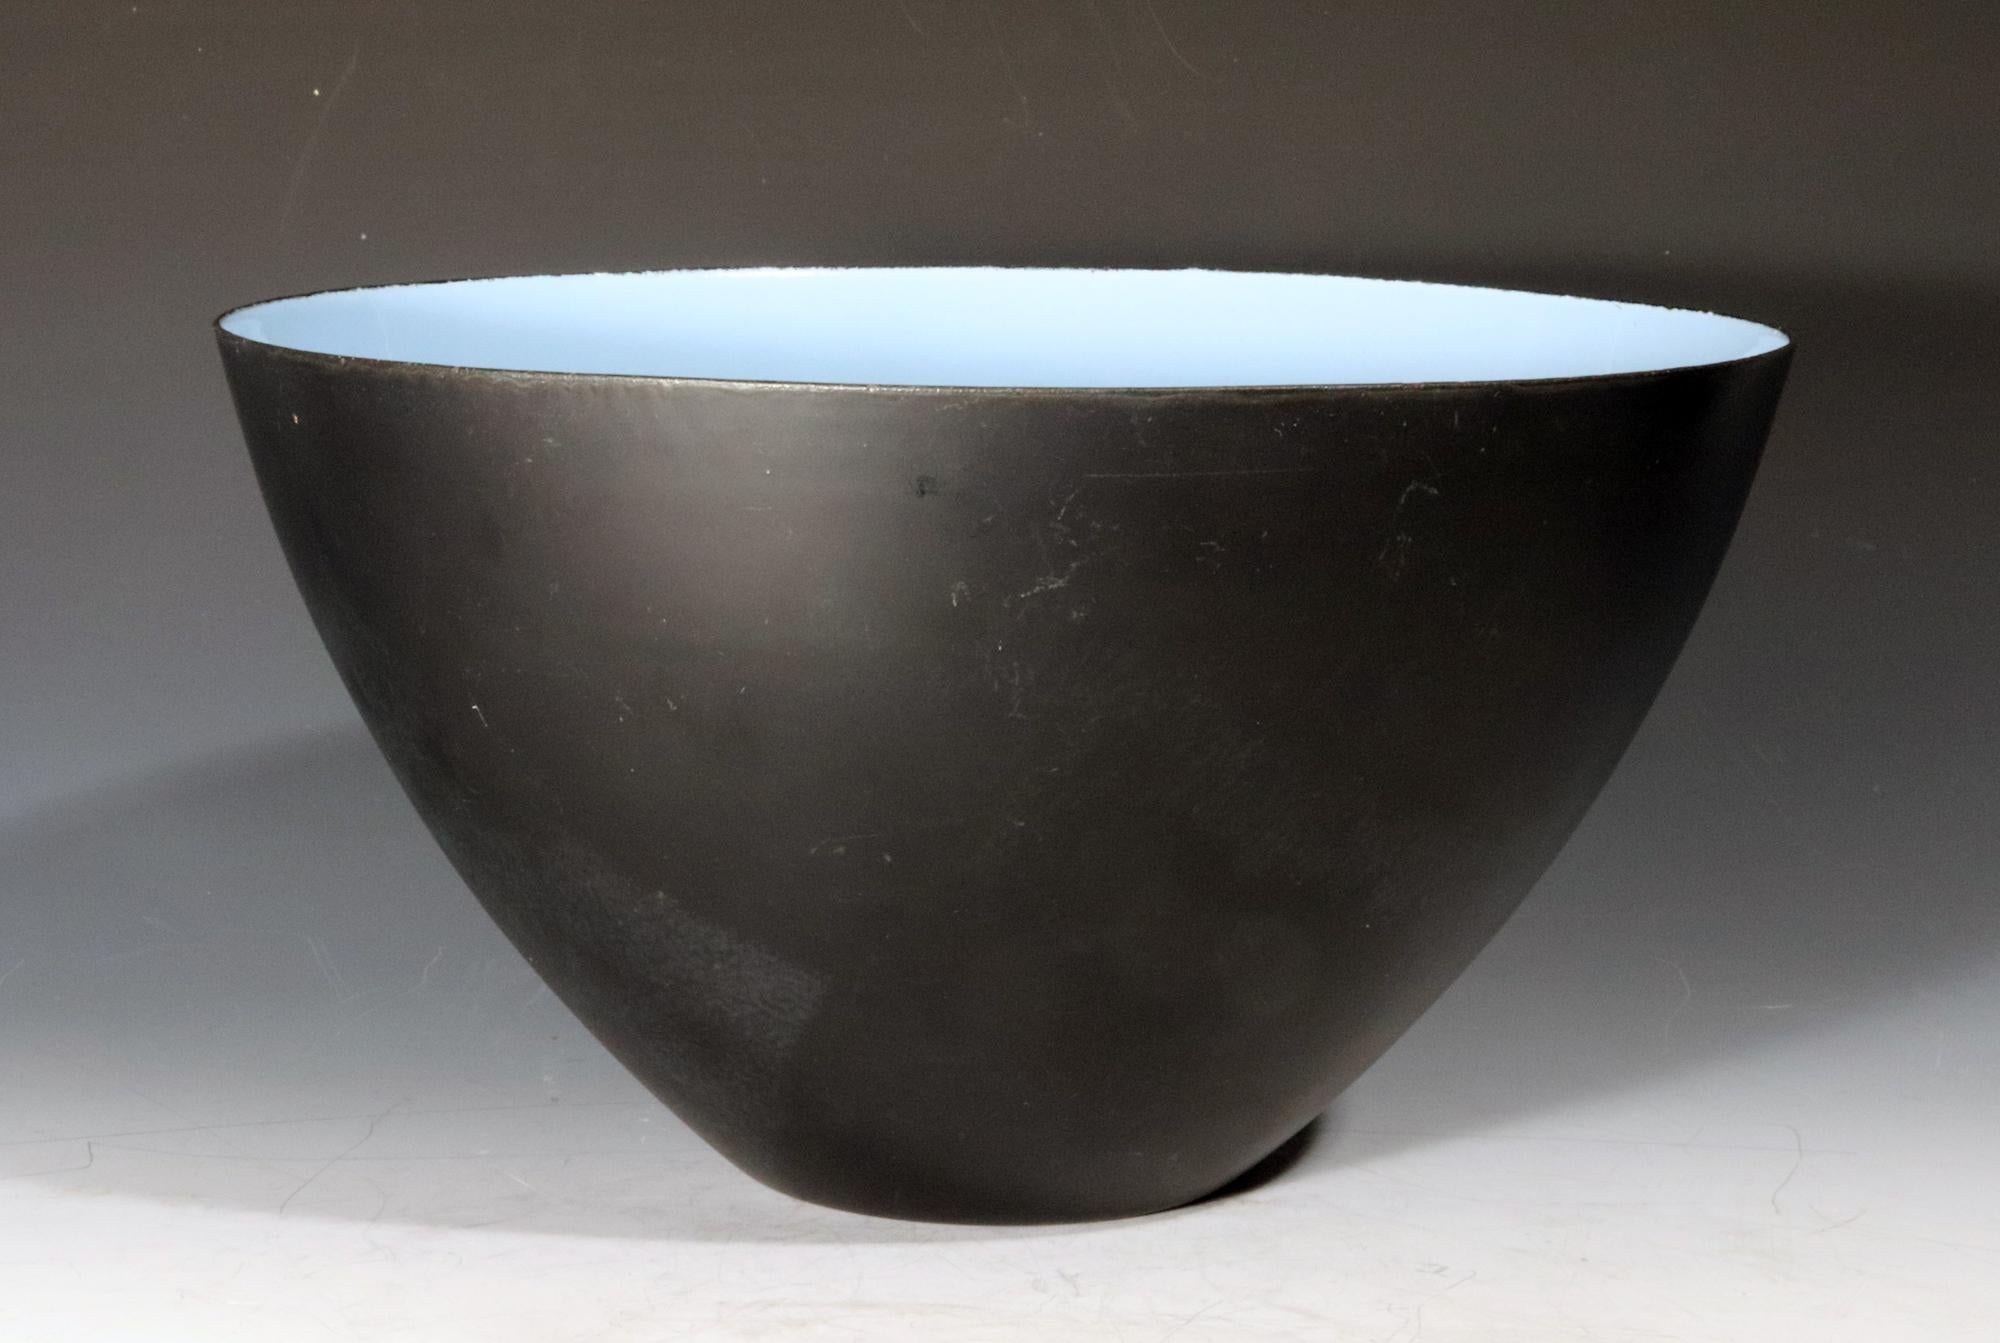 Modernist Krenit Bowl in Black Steel and Robins-egg- Blue Enamel interior
by Herbert Krenchel for Torben Ørskov & Co.,
Enameled Steel,
Designed 1953

This 1950-60's Modernist bowl, the 'Krenit' bowl, was designed by mechanical engineer Herbert